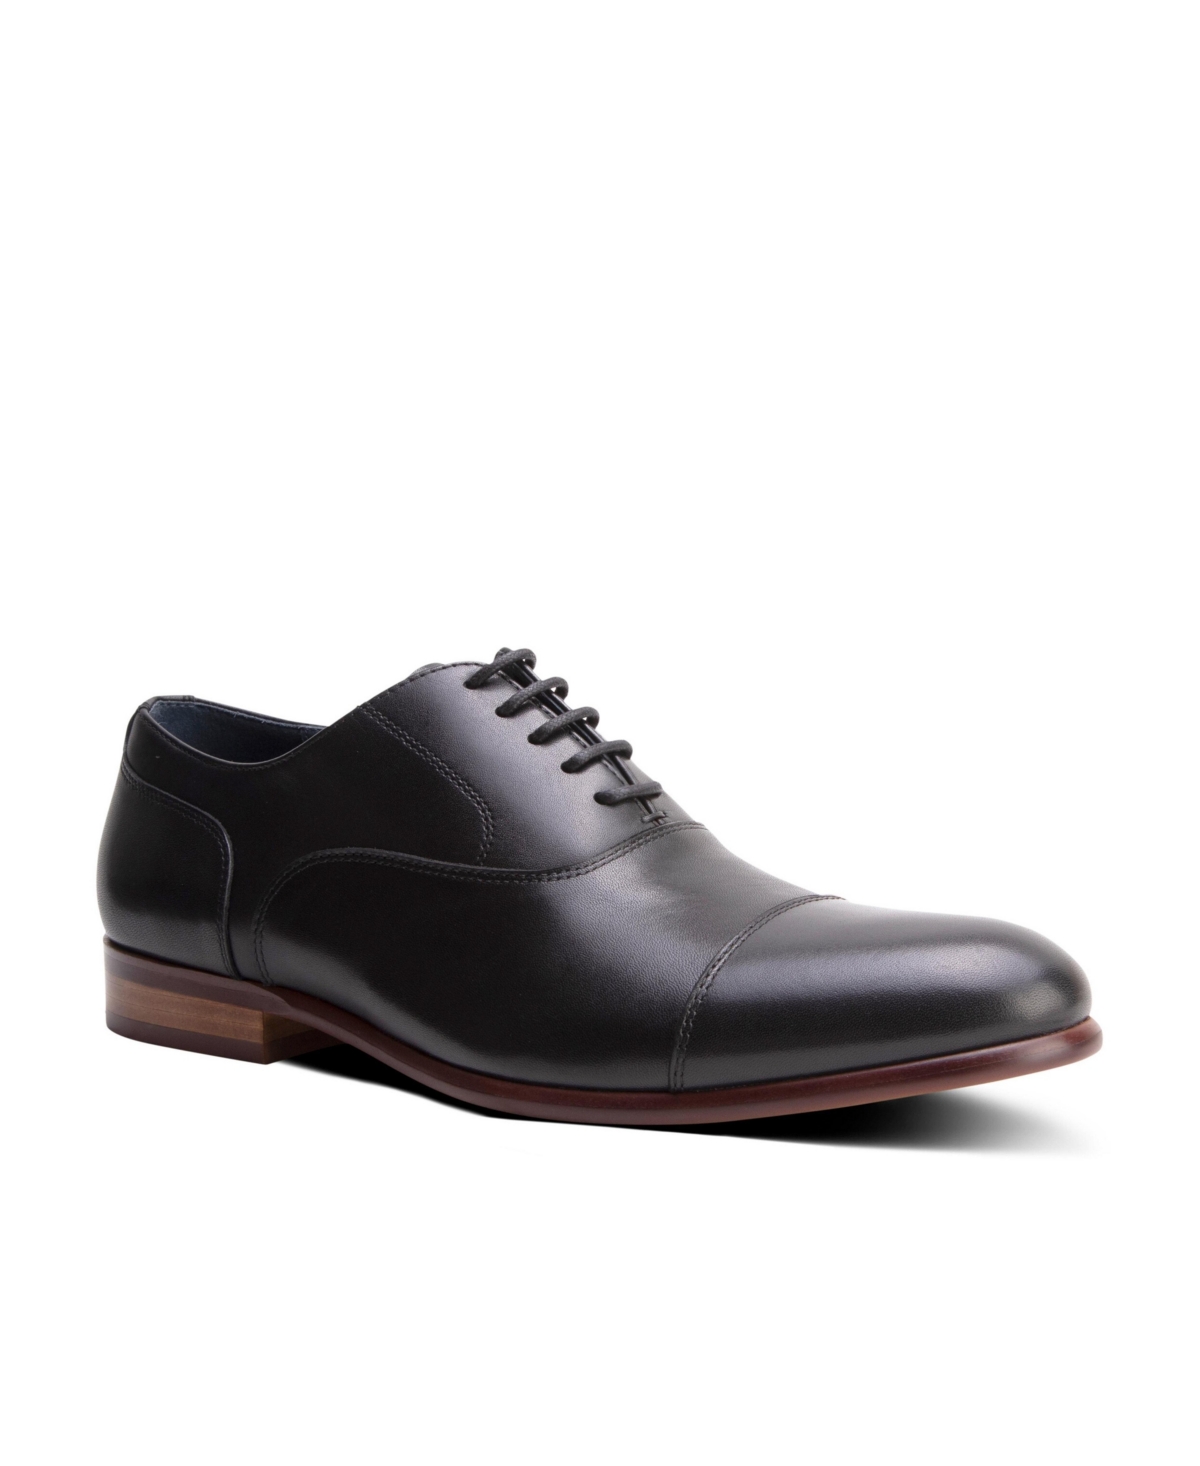 Men's Melvern Dress Lace-Up Cap Toe Oxford Leather Shoes - Chestnut